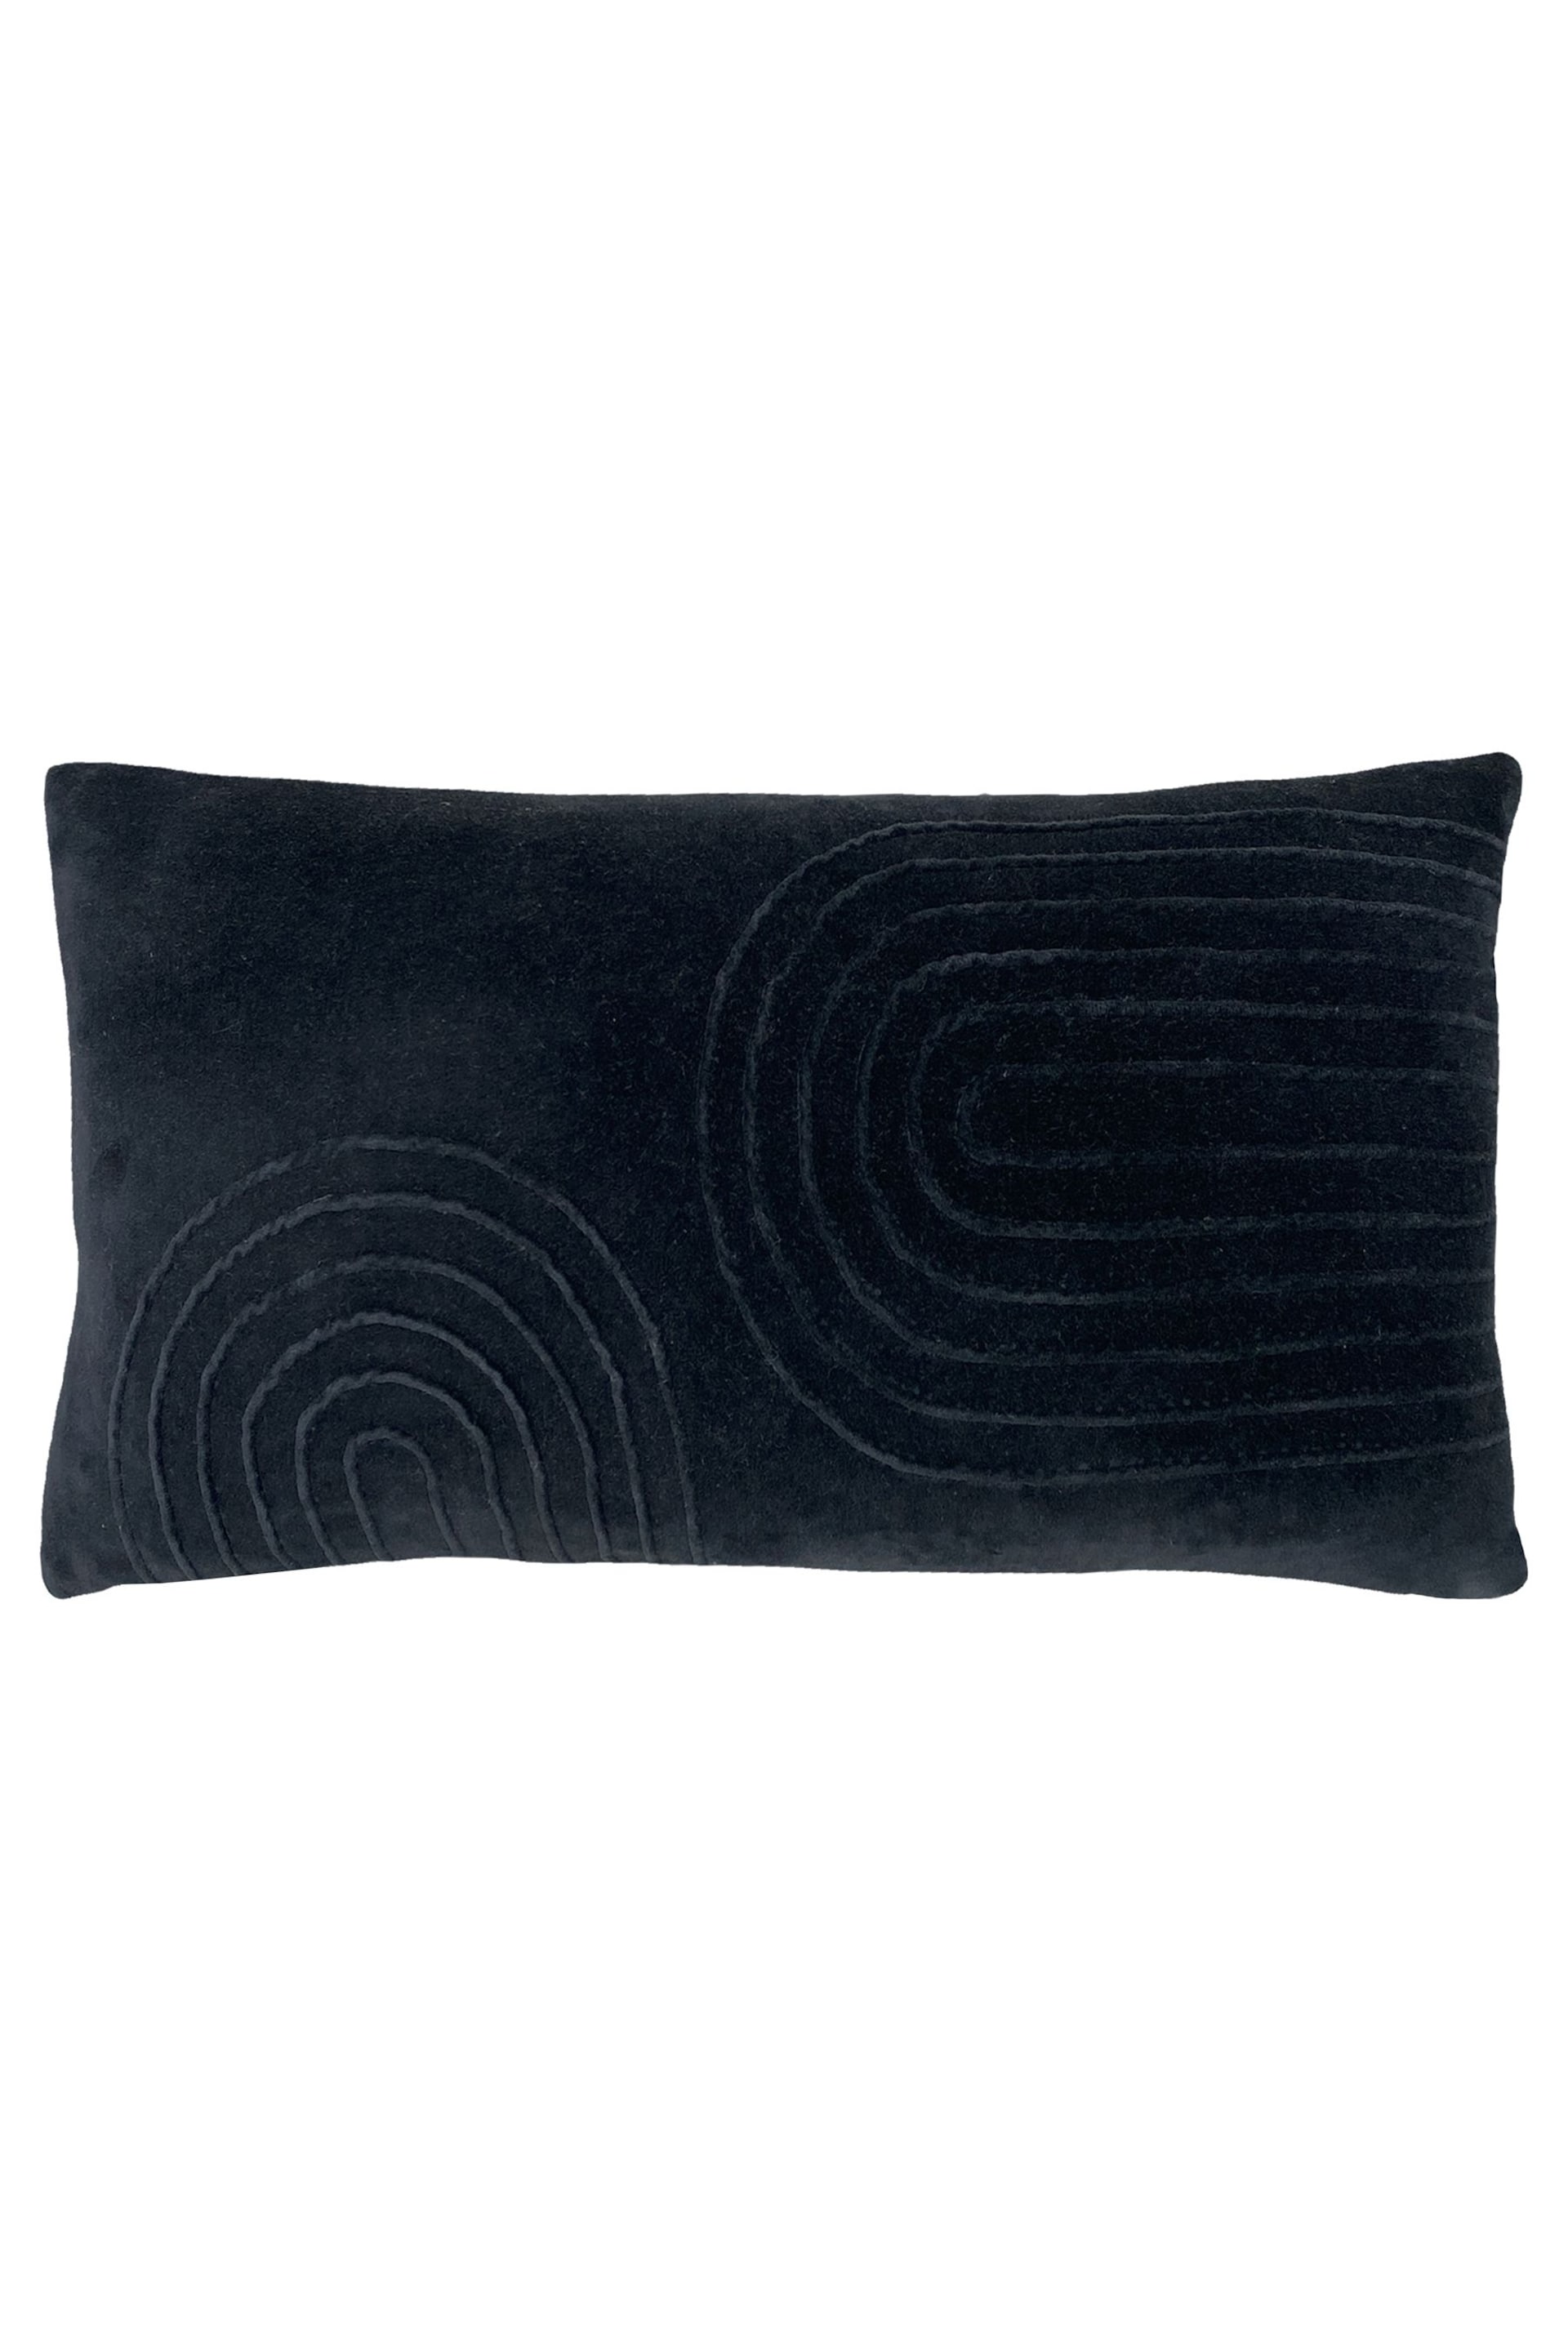 furn. Black Mangata Cushion - Image 1 of 4